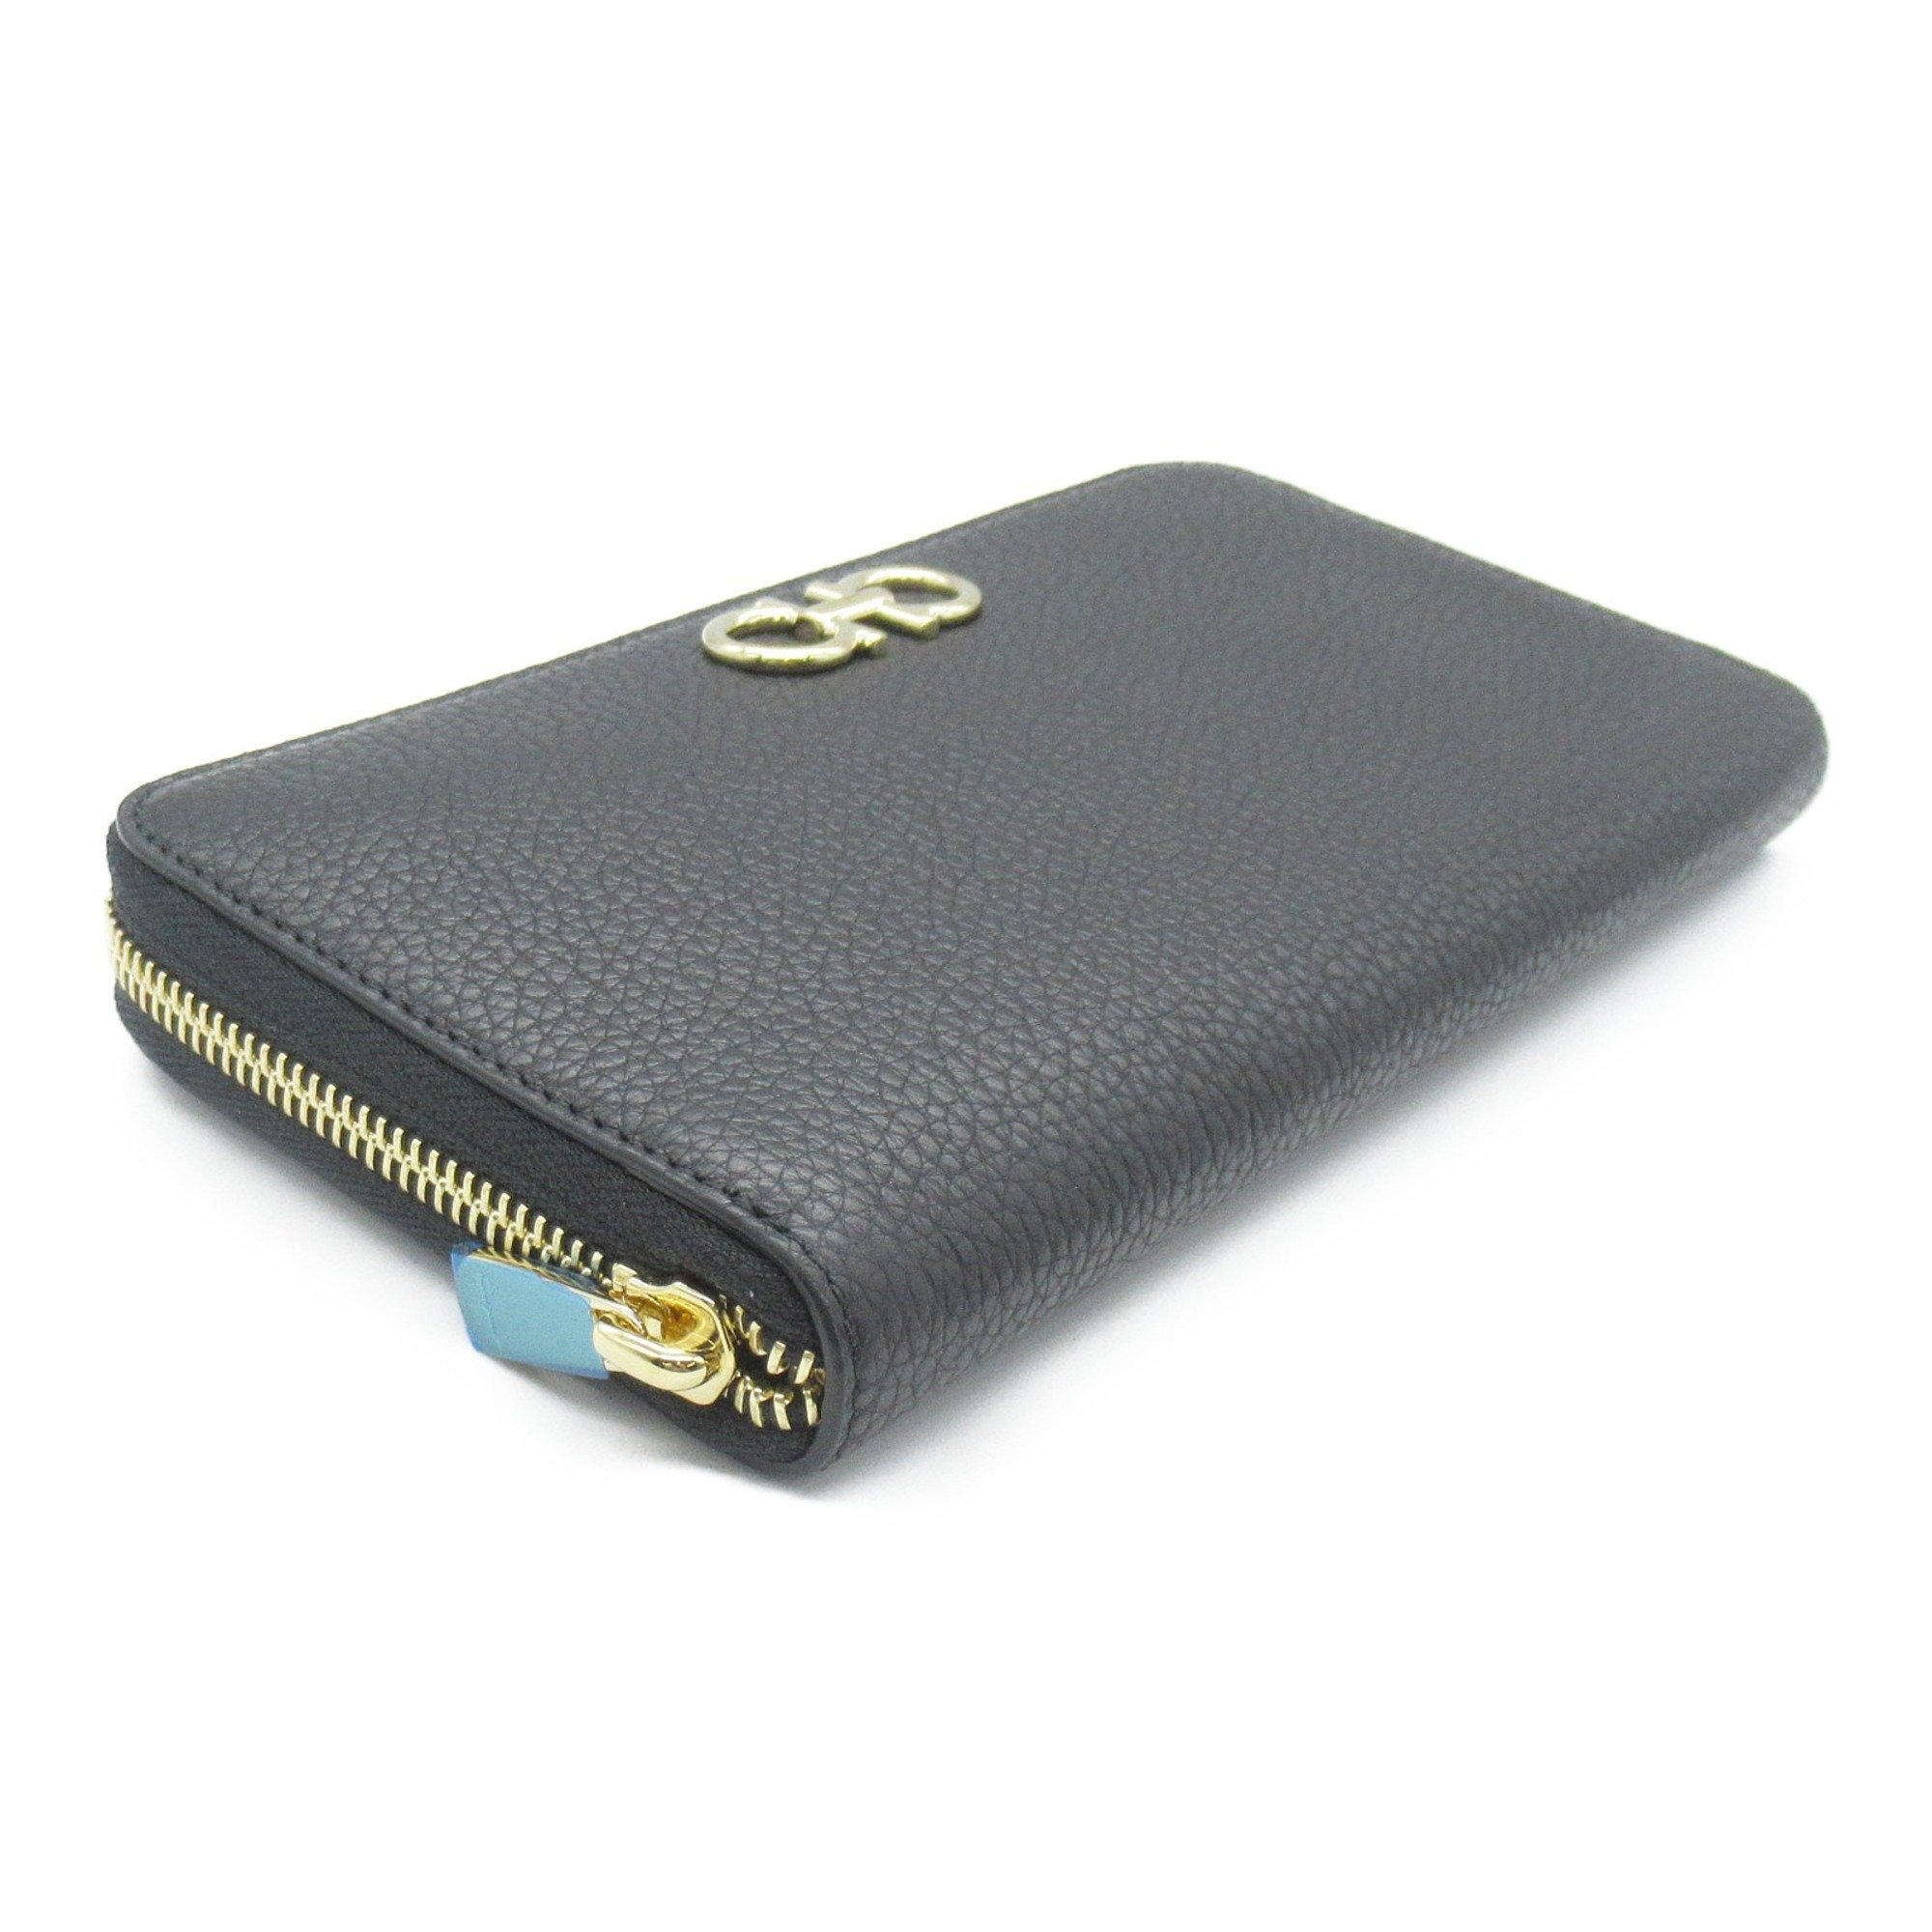 Salvatore Ferragamo Round long wallet Black leather 758661